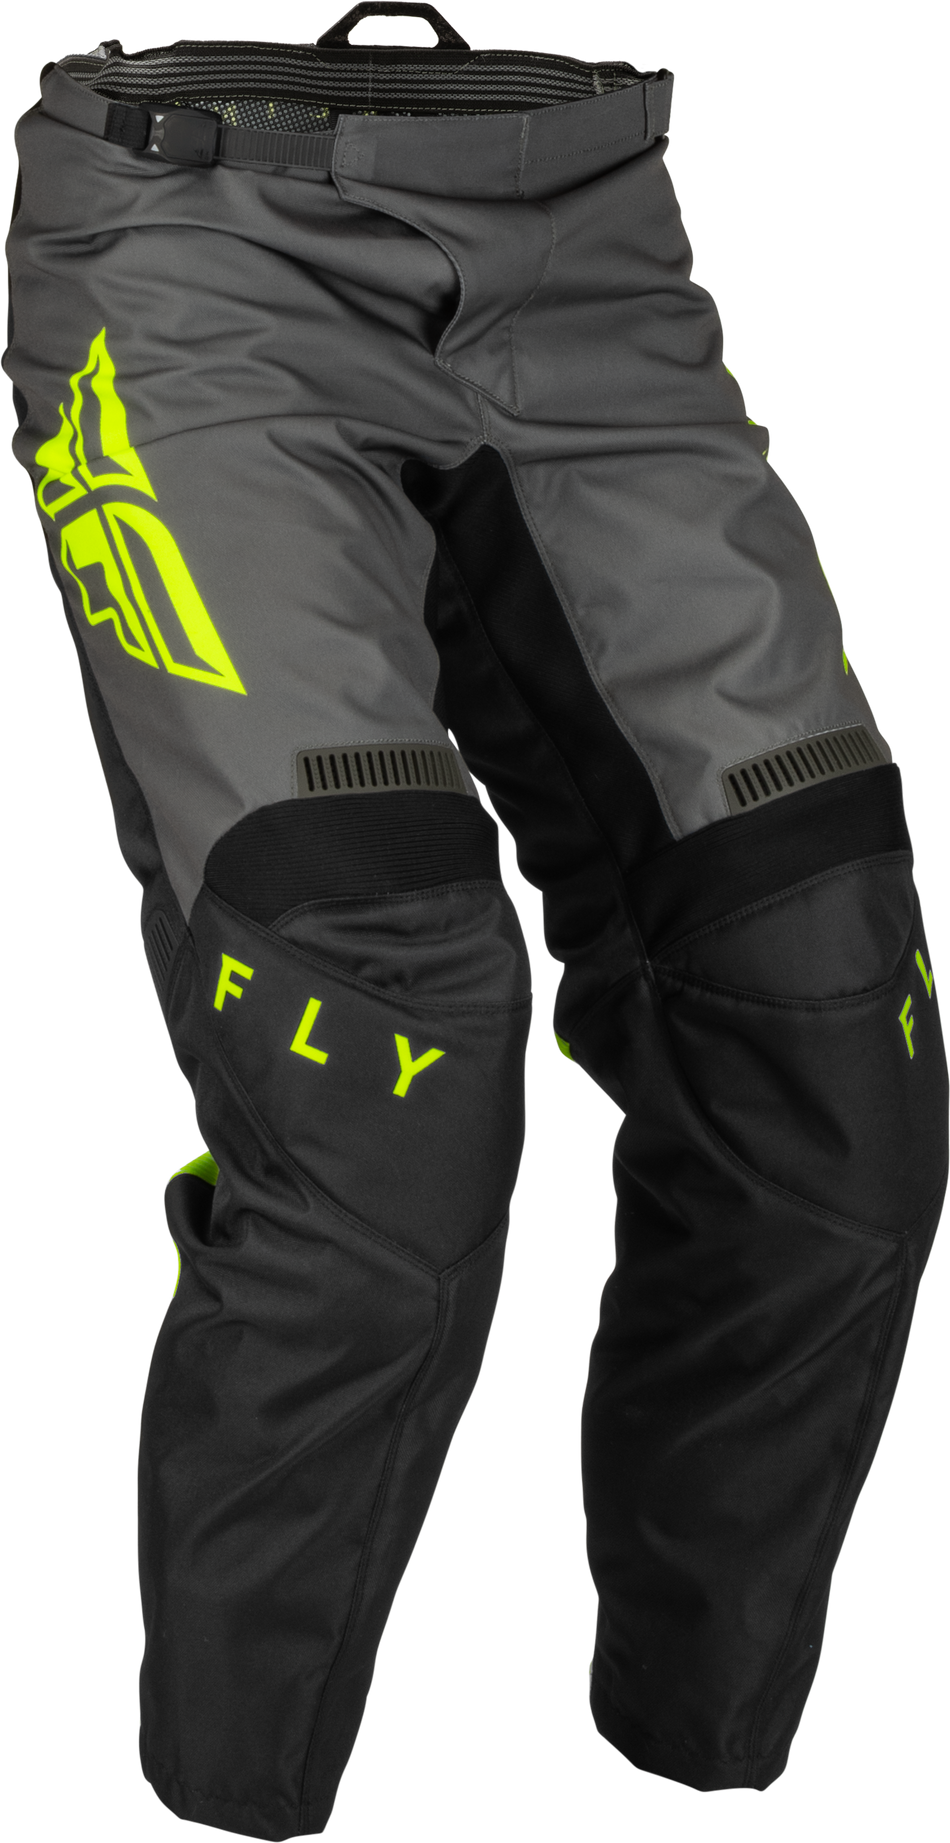 FLY RACING F-16 Pants Black/Grey/Hi-Vis Sz 34 376-93034